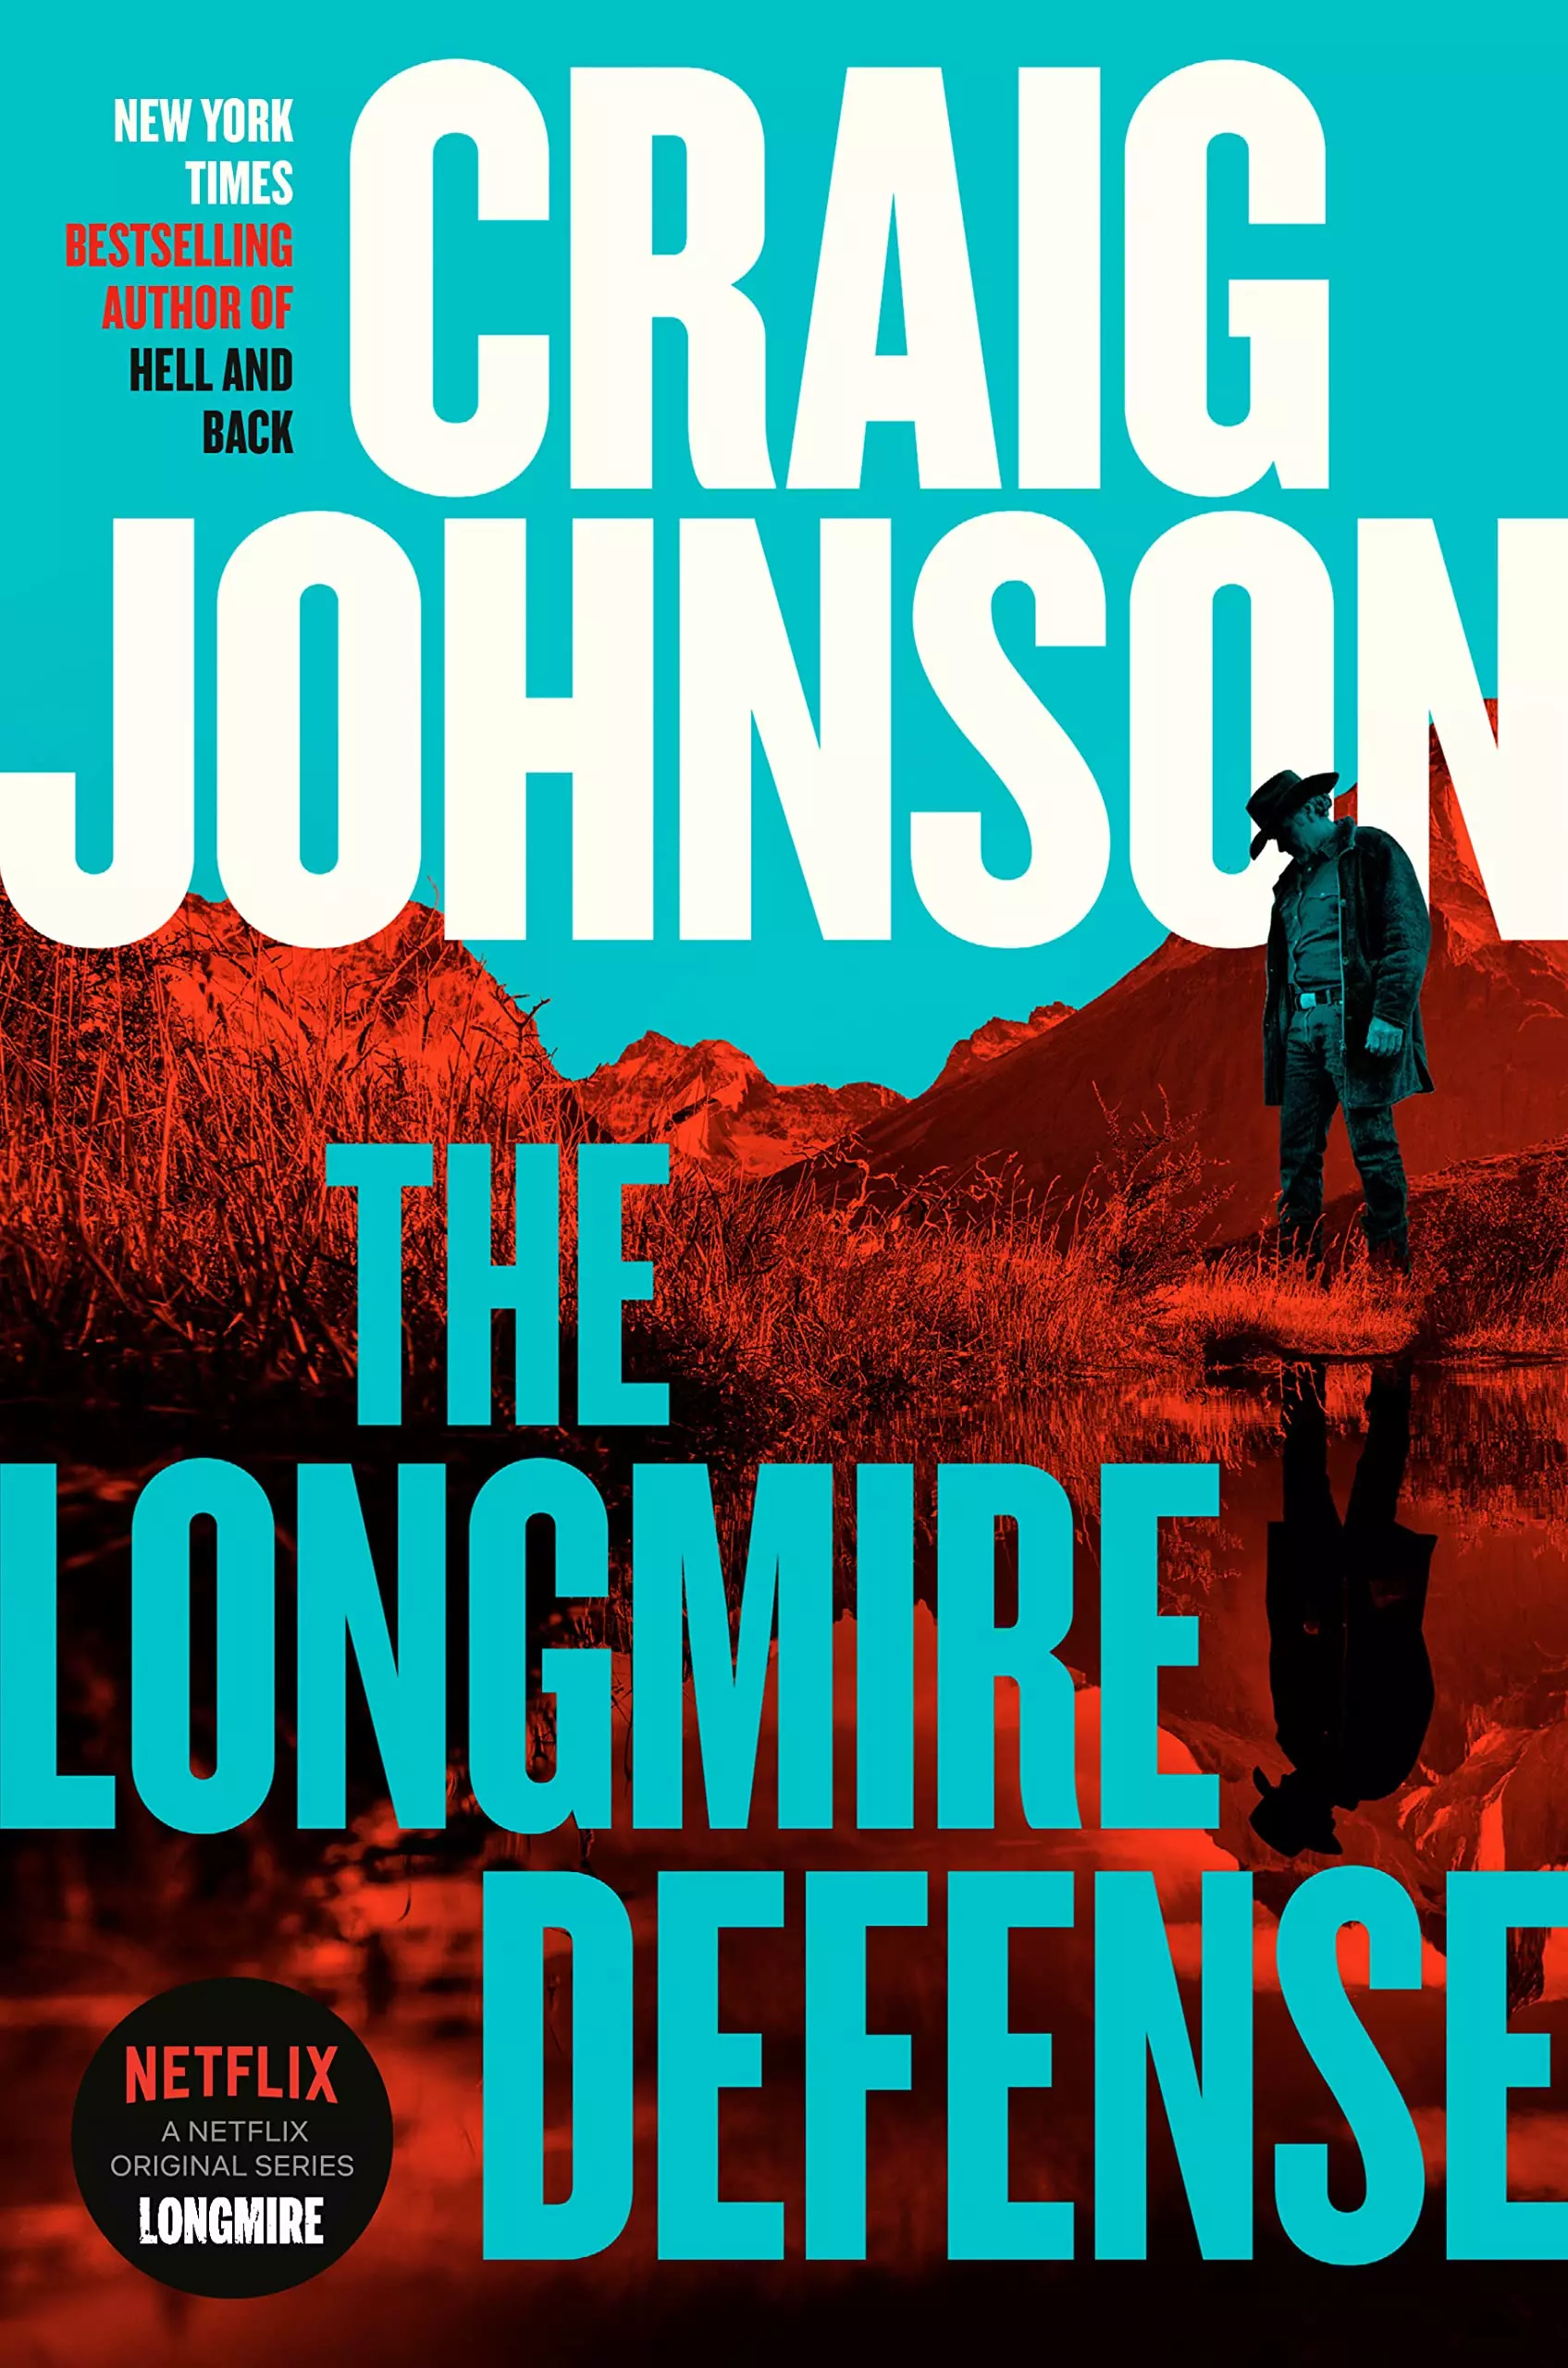 The Longmire Defense, Johnson's twenty fifth book